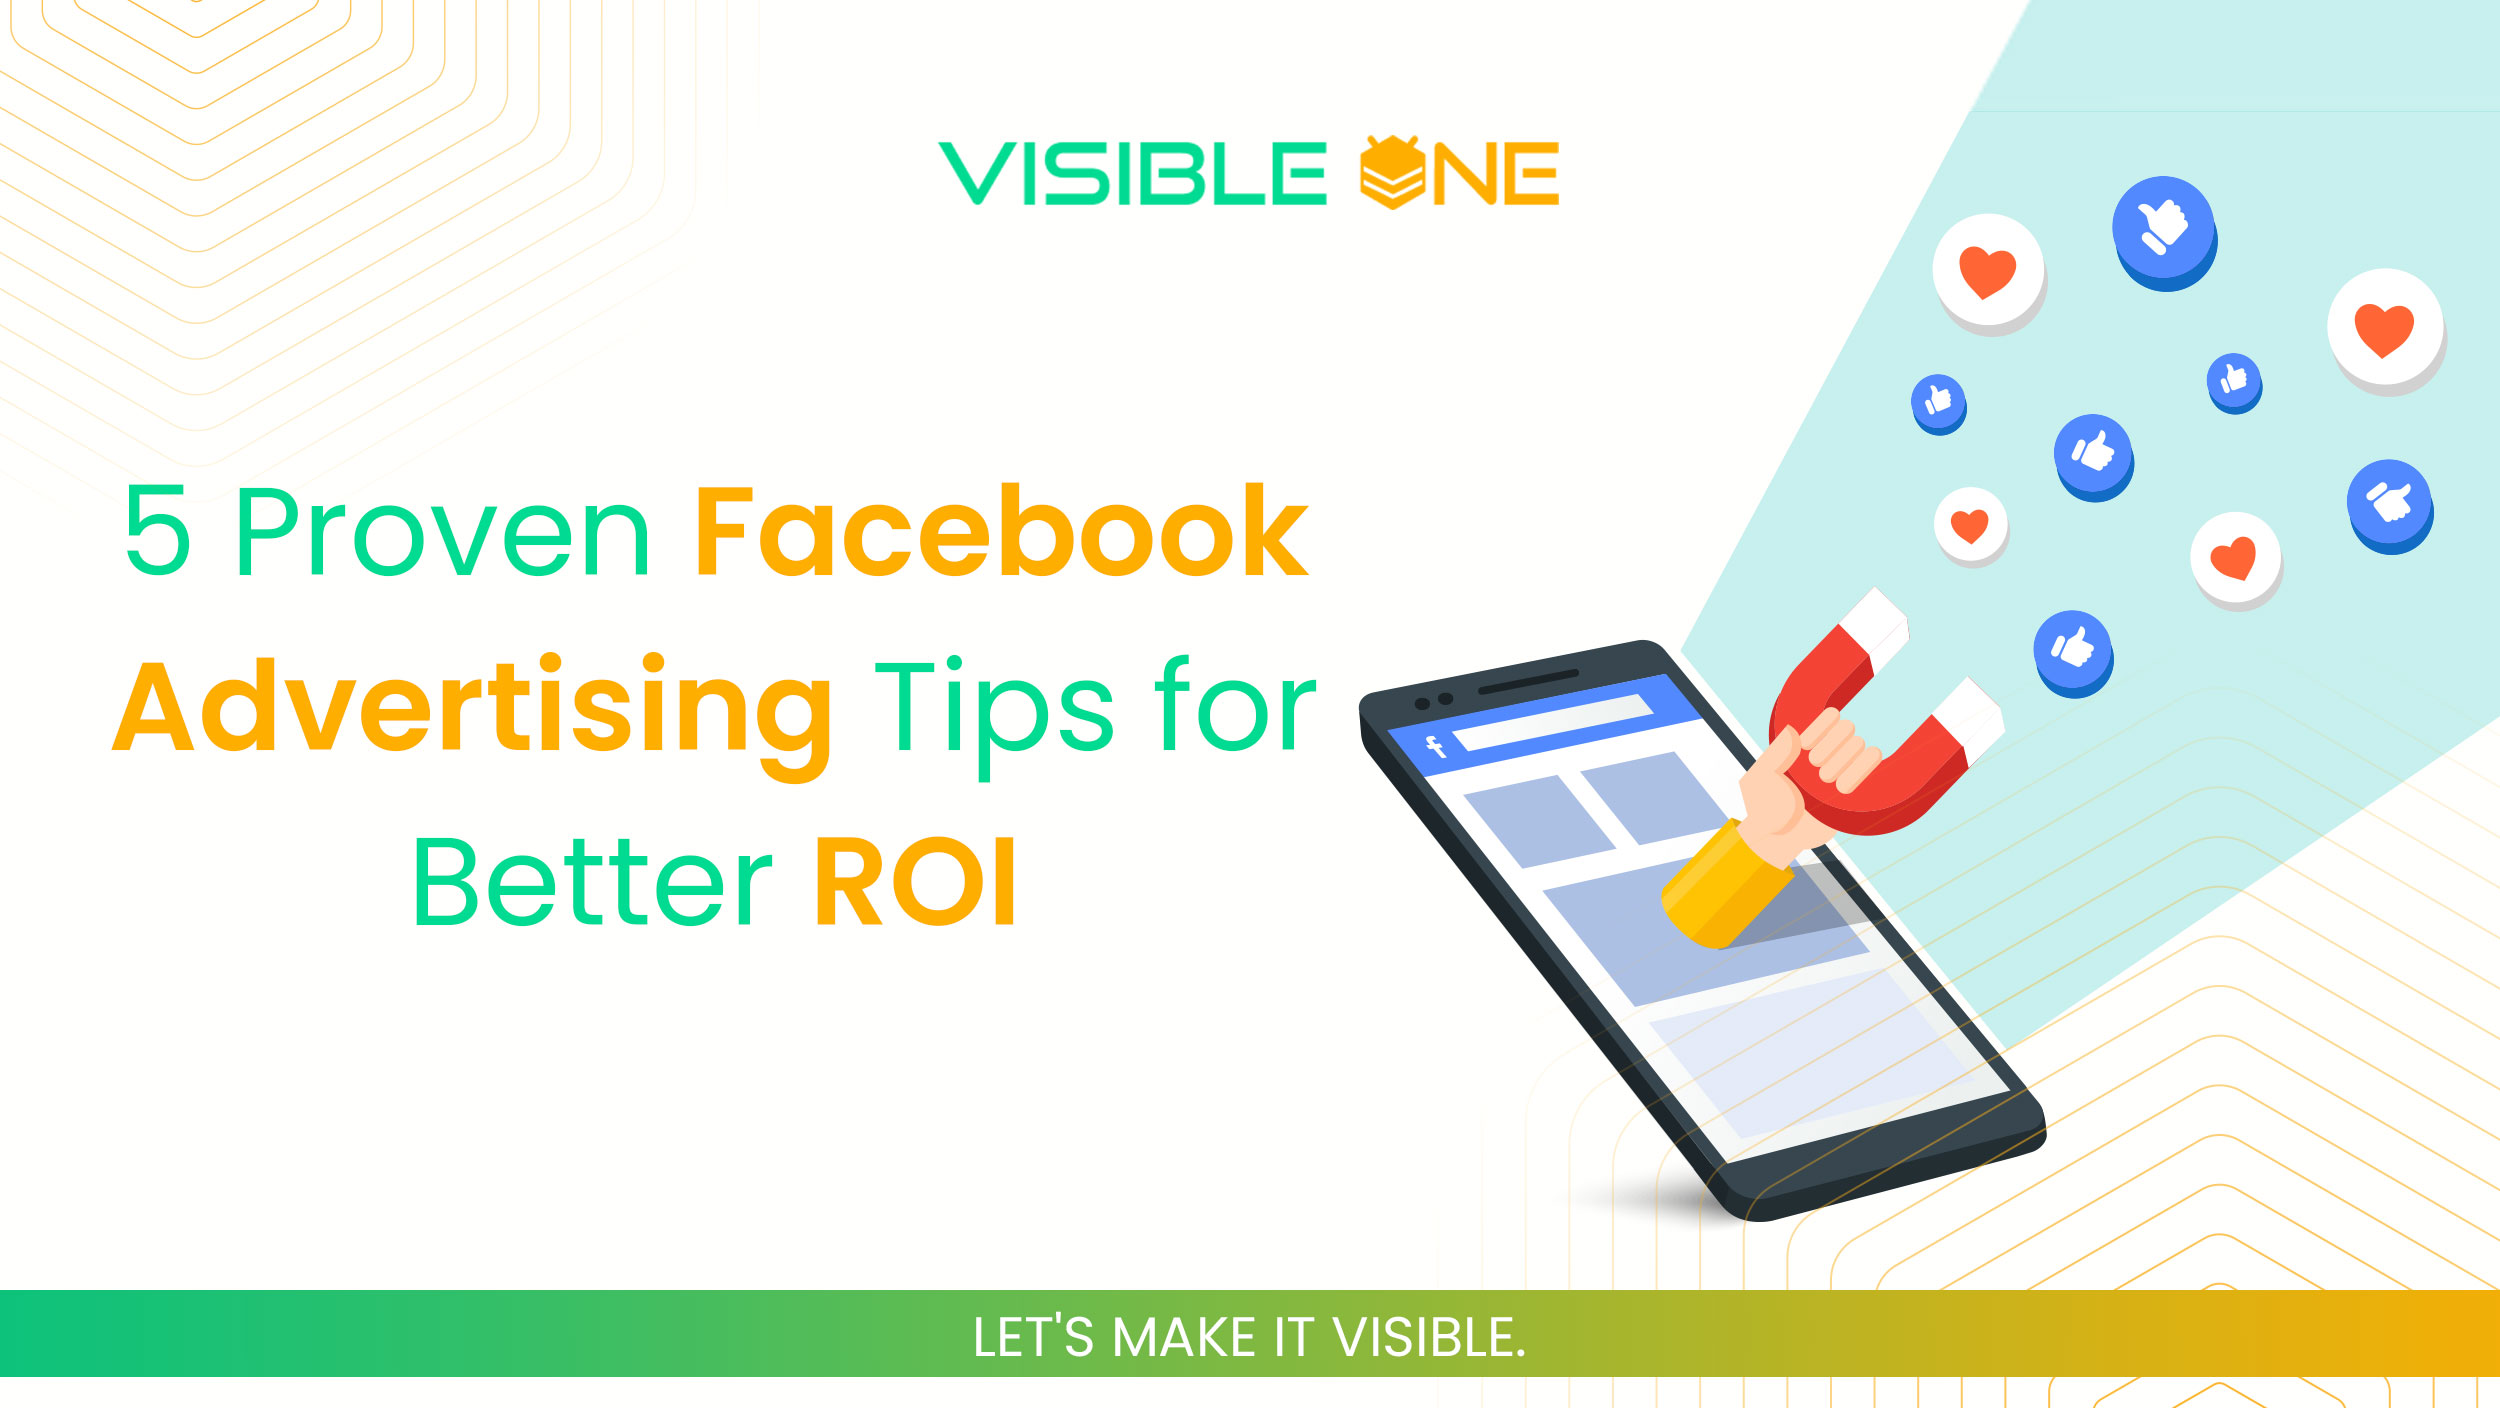 5 Proven Facebook Advertising Tips for Better ROI